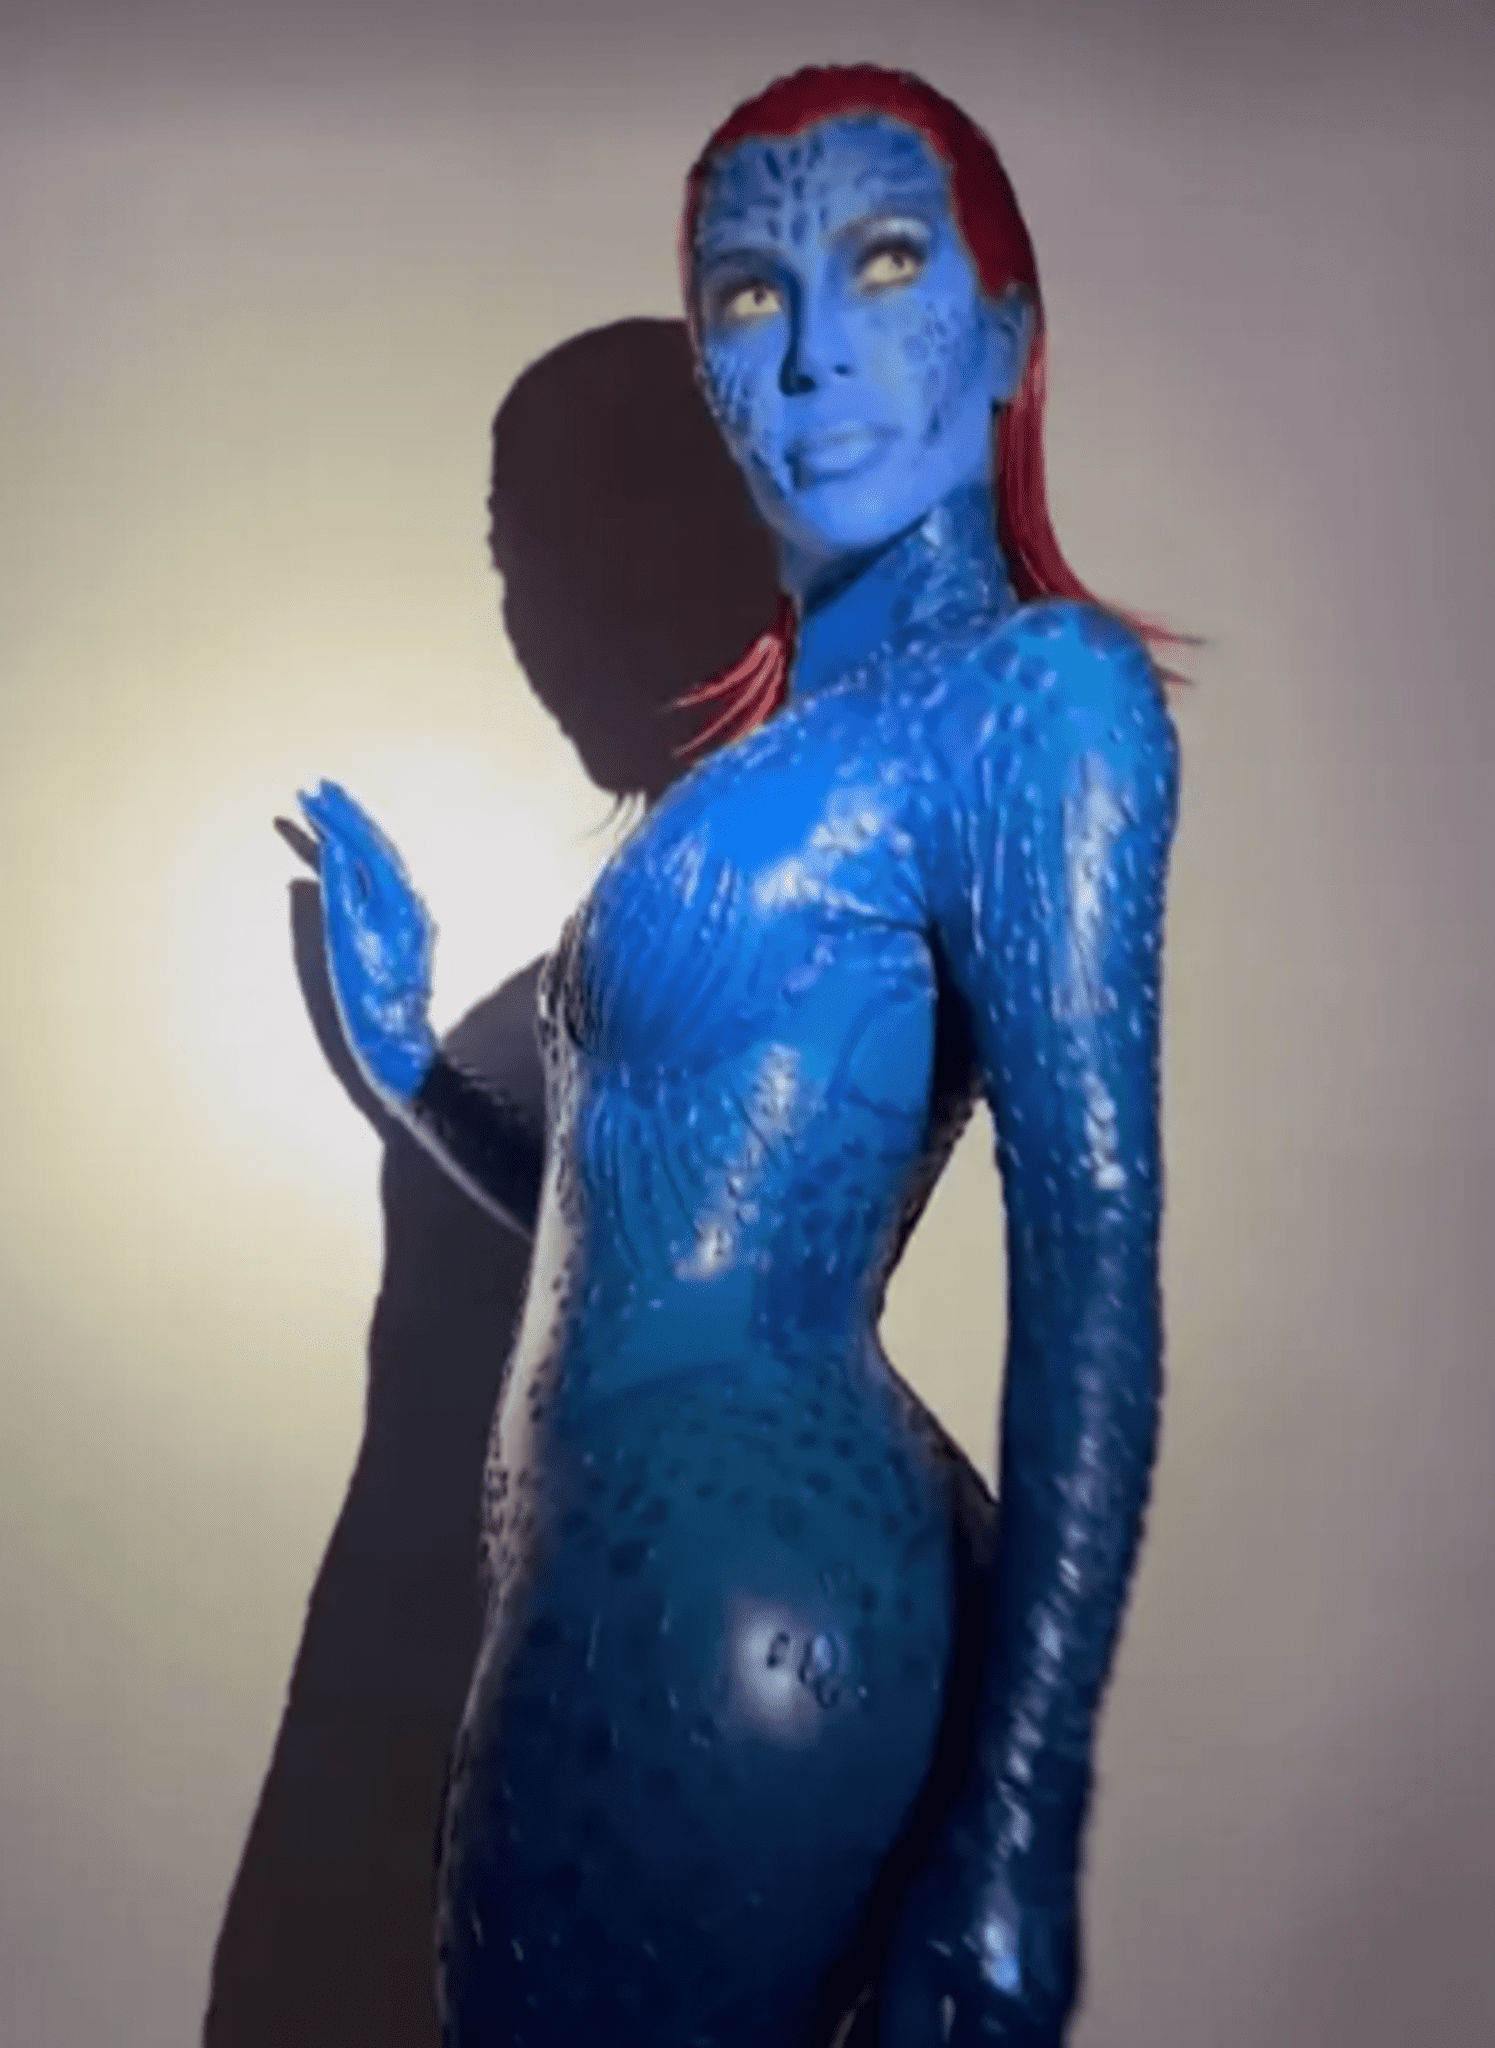 Kim Kardashian dressed as the enigmatic Mystique from X-Men on Halloween.